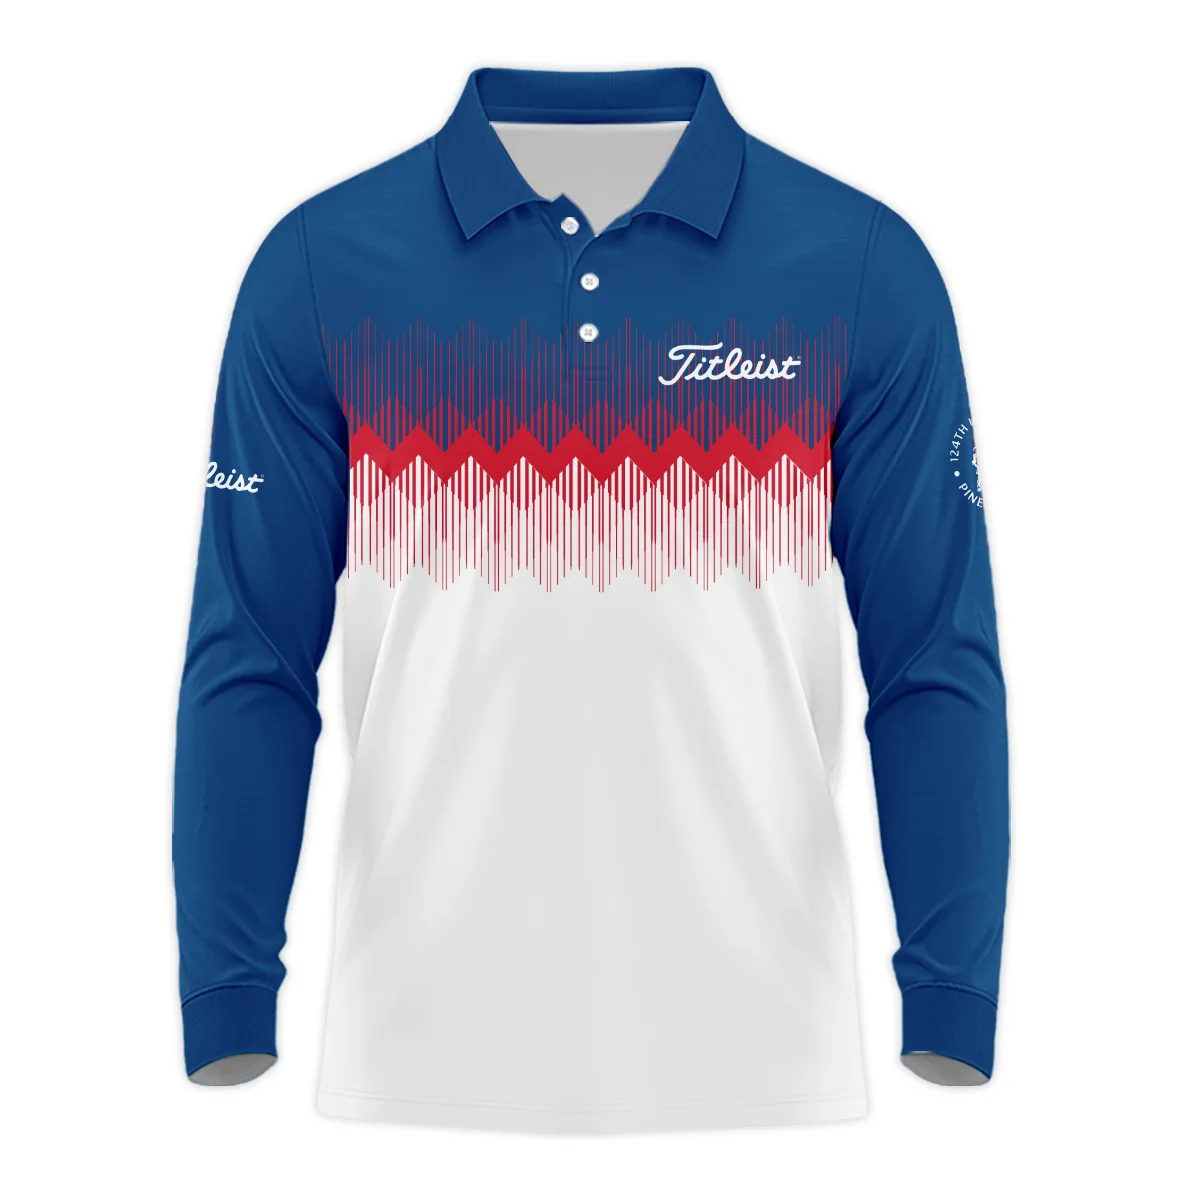 Titleist 124th U.S. Open Pinehurst Sleeveless Jacket Blue Red Fabric Pattern Golf Sleeveless Jacket